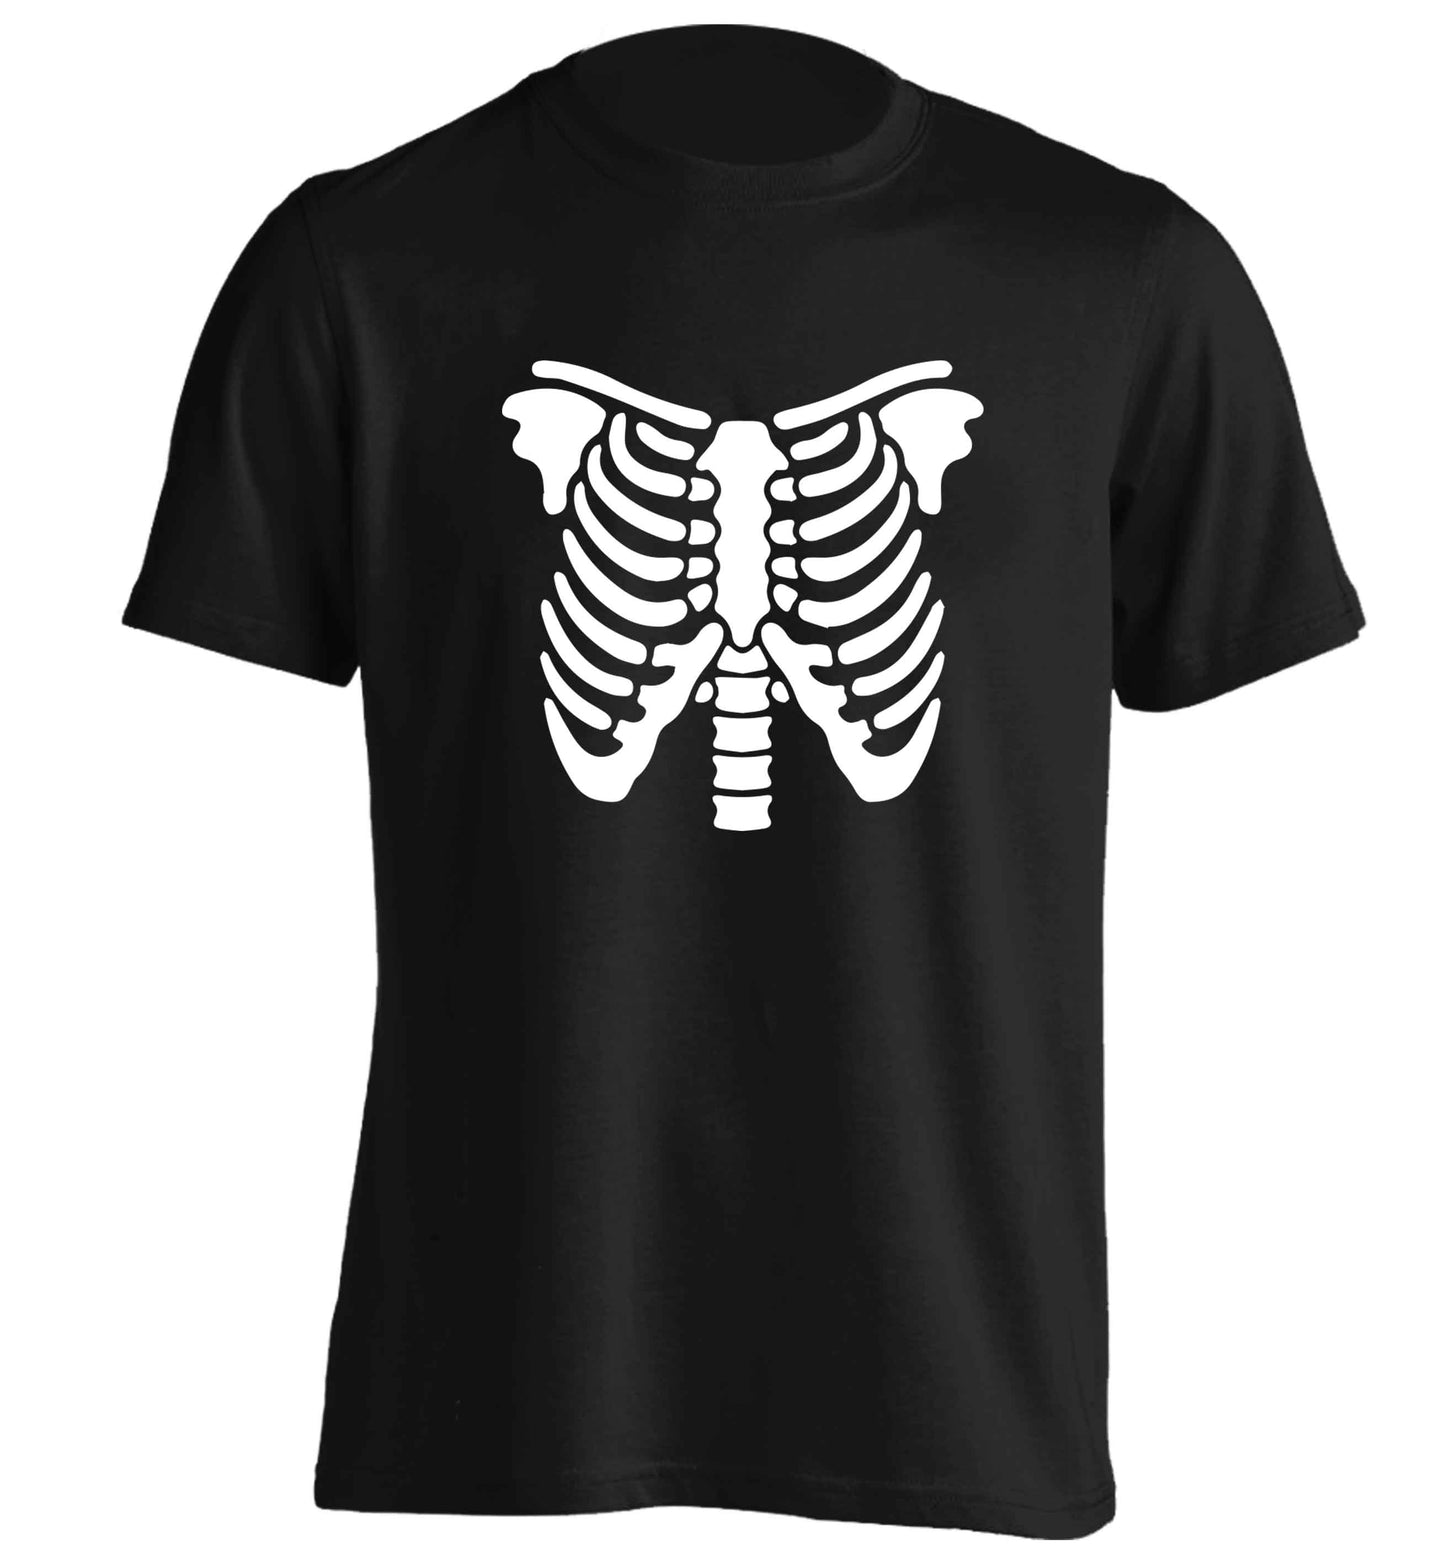 Skeleton ribcage adults unisex black Tshirt 2XL